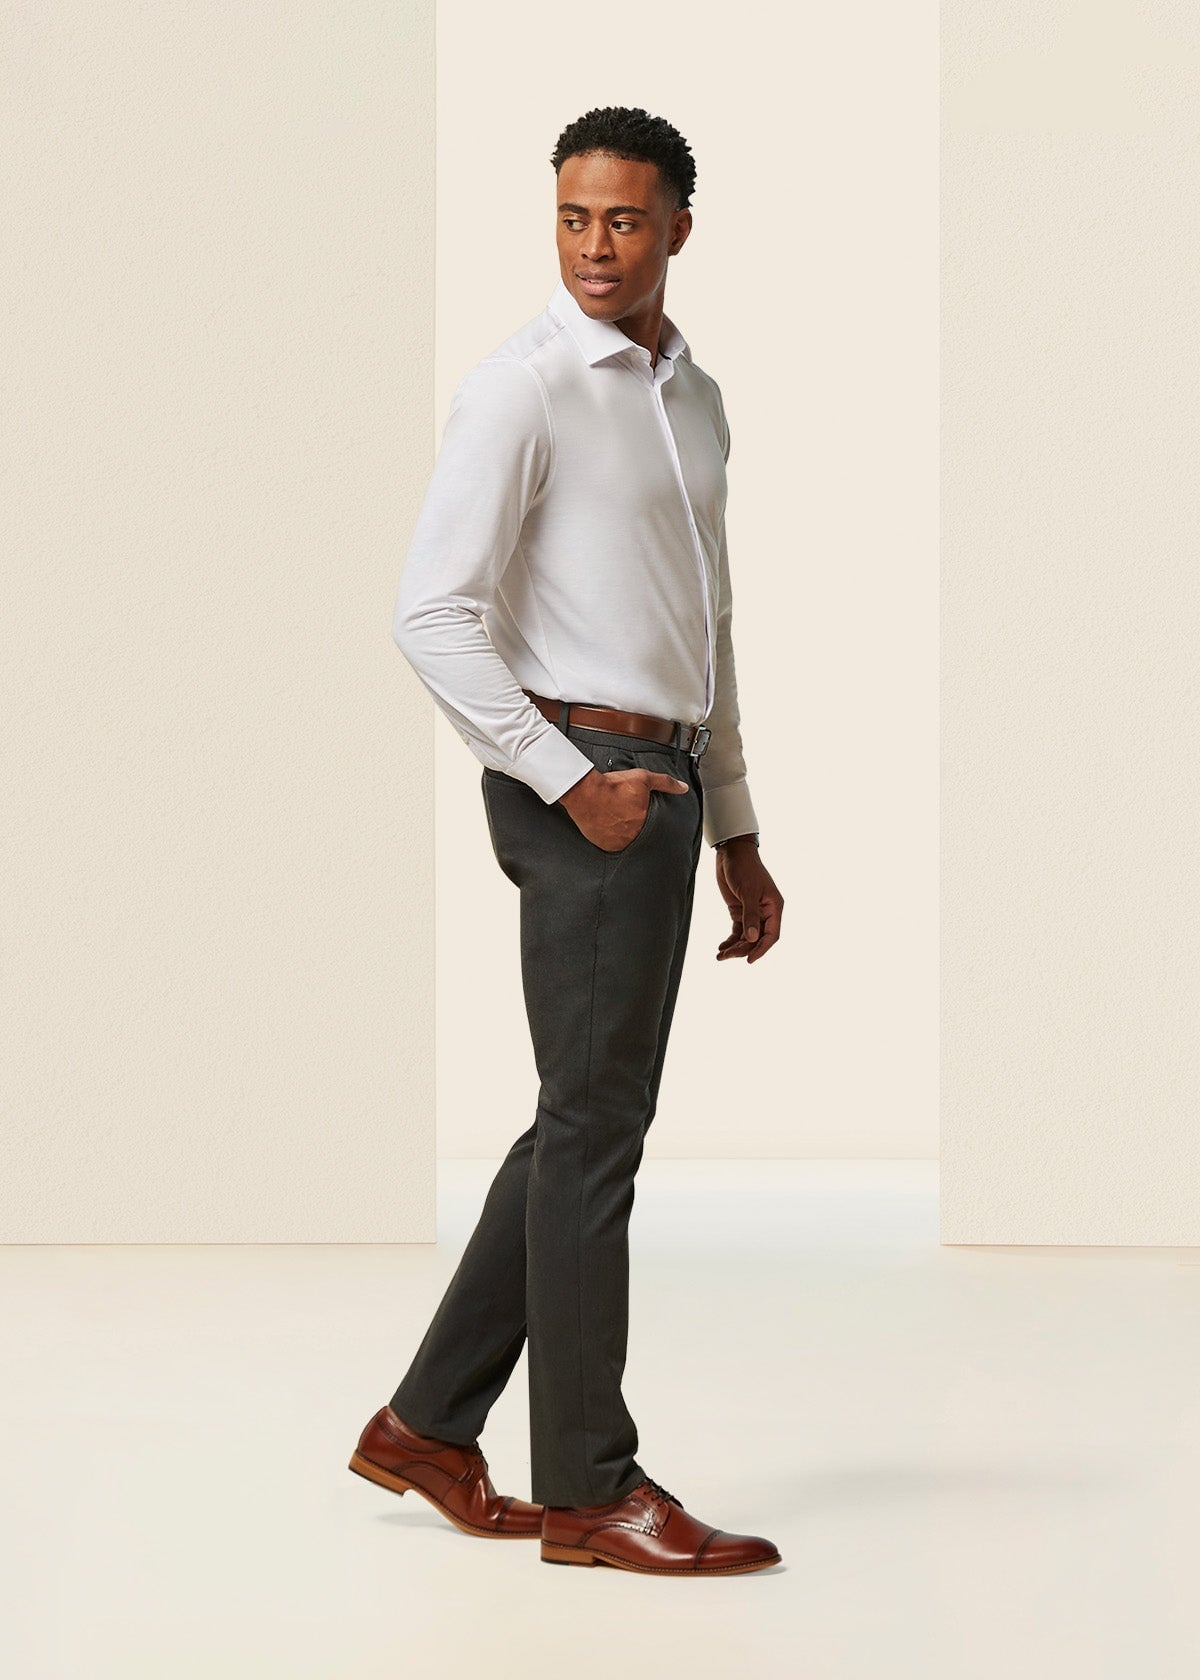 ESSYSHE Men's Cropped Slim Fit Dress Pants Tapered Ankle Dress Pants Suit  Pants 6060Black 28 at Amazon Men's Clothing store